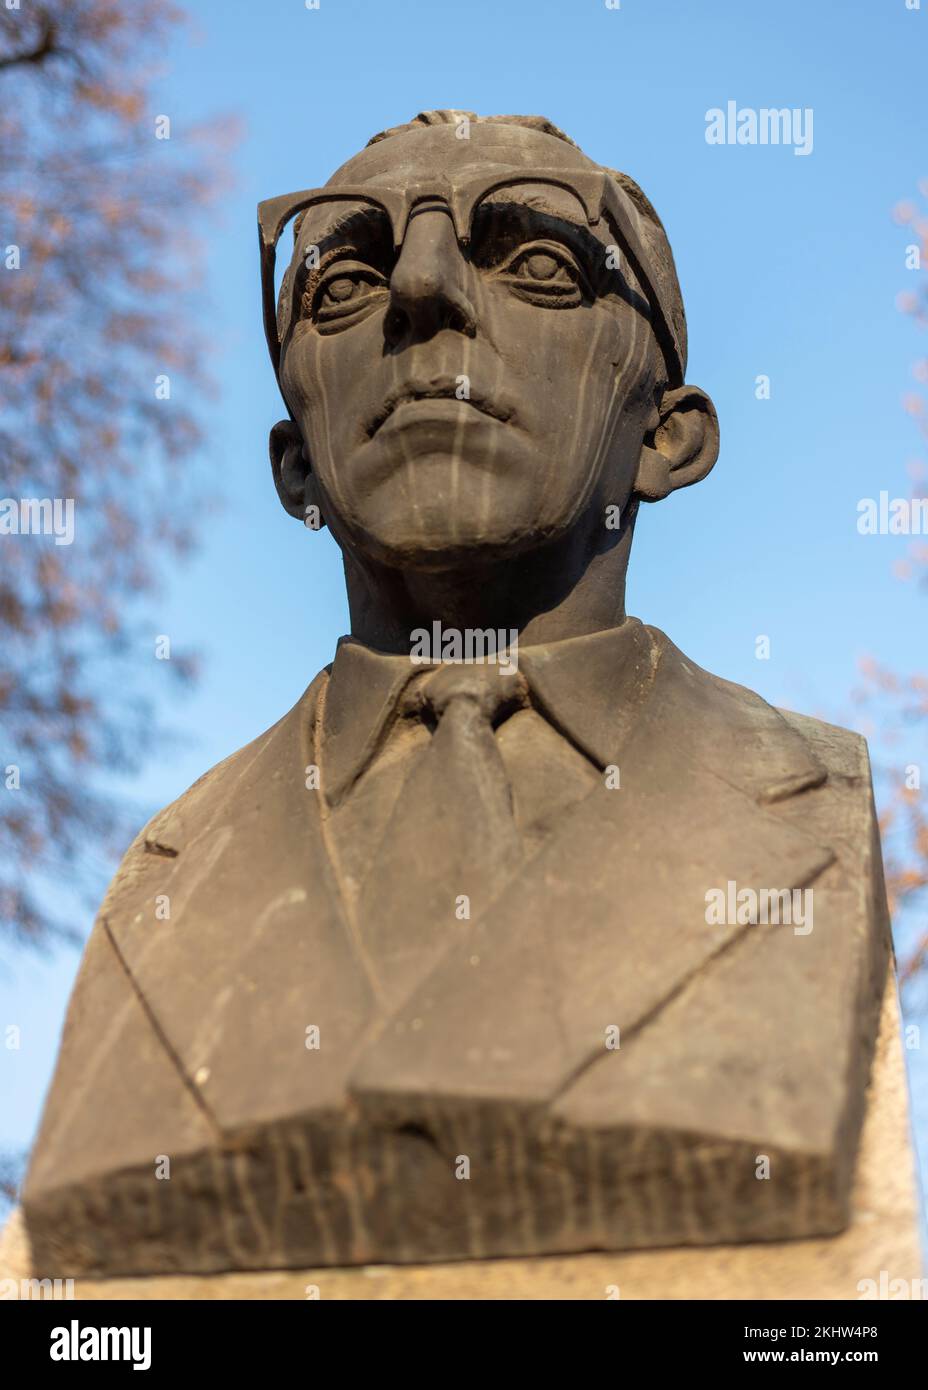 Bust of Dimitar Dimov as a prominent Bulgarian dramatist and novelist. Sofia, Bulgaria Stock Photo